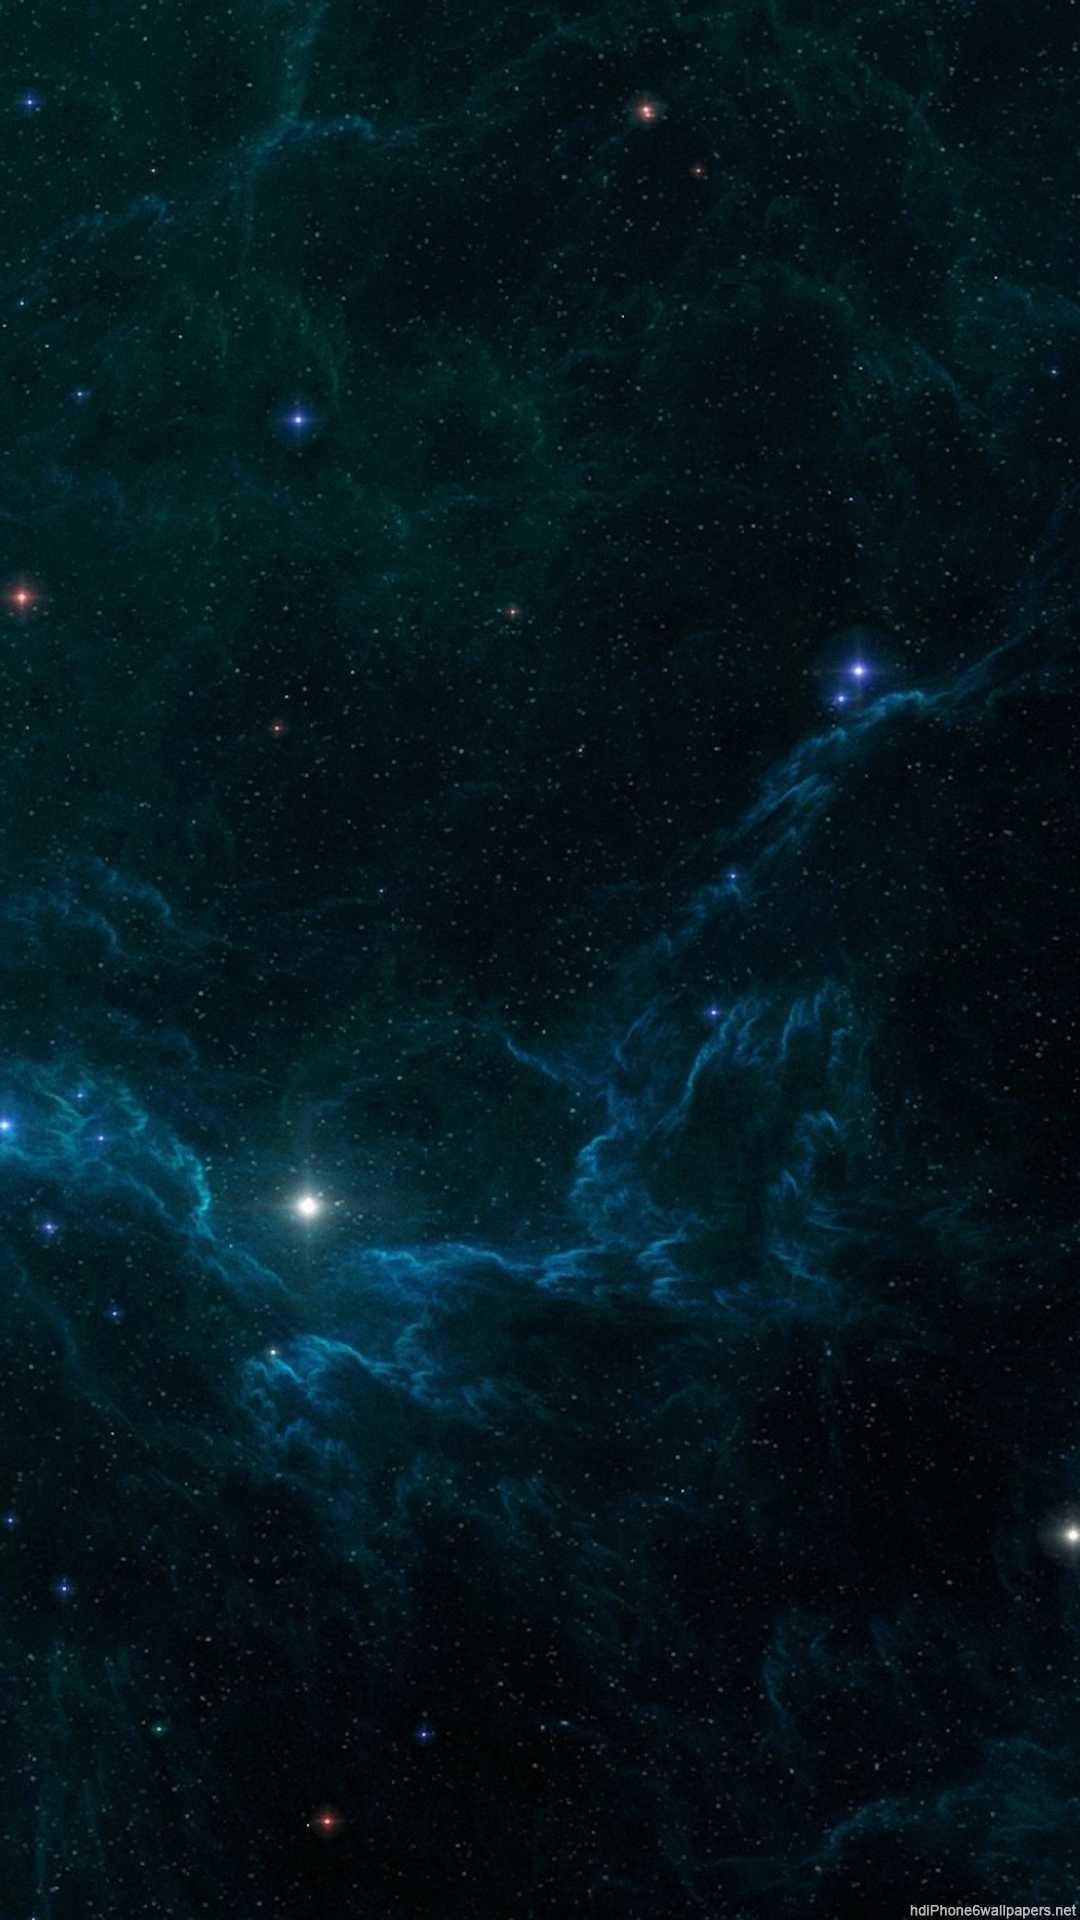 1080x19 Iphone Stars Wallpaper With Star Night Sky Nova 1080x19 Wallpaper Teahub Io